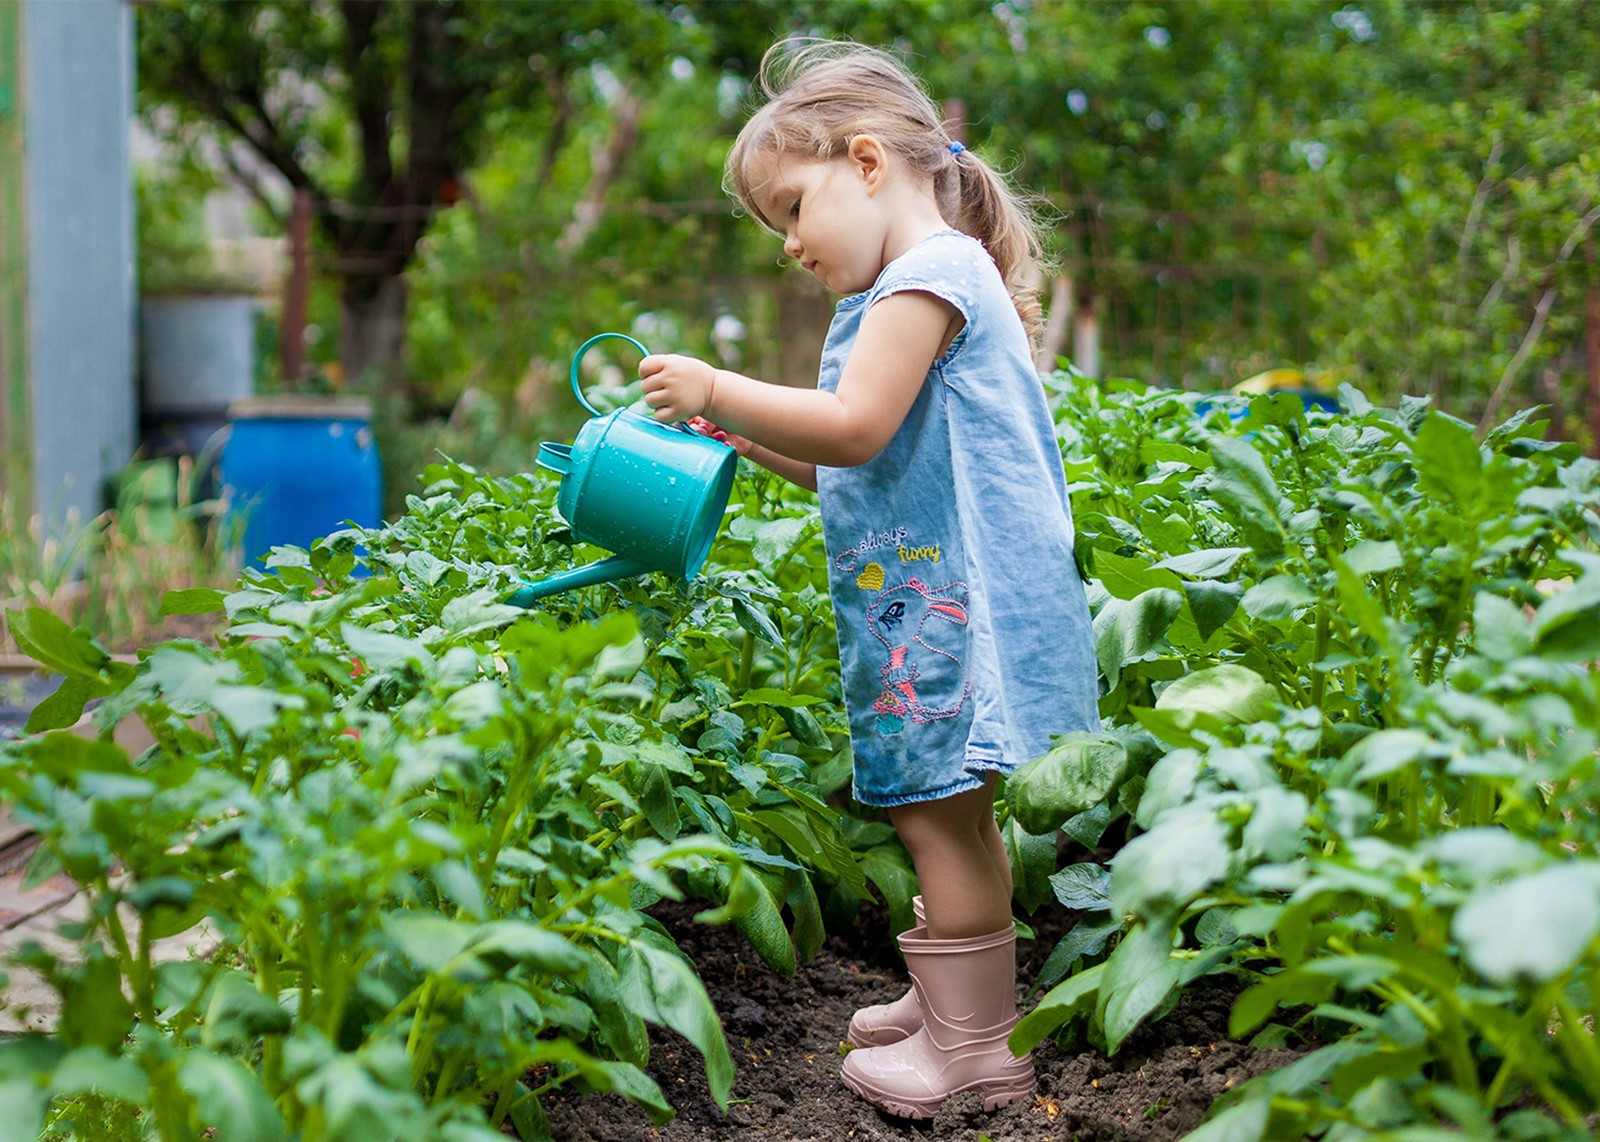 Little girl watering plants in the garden.